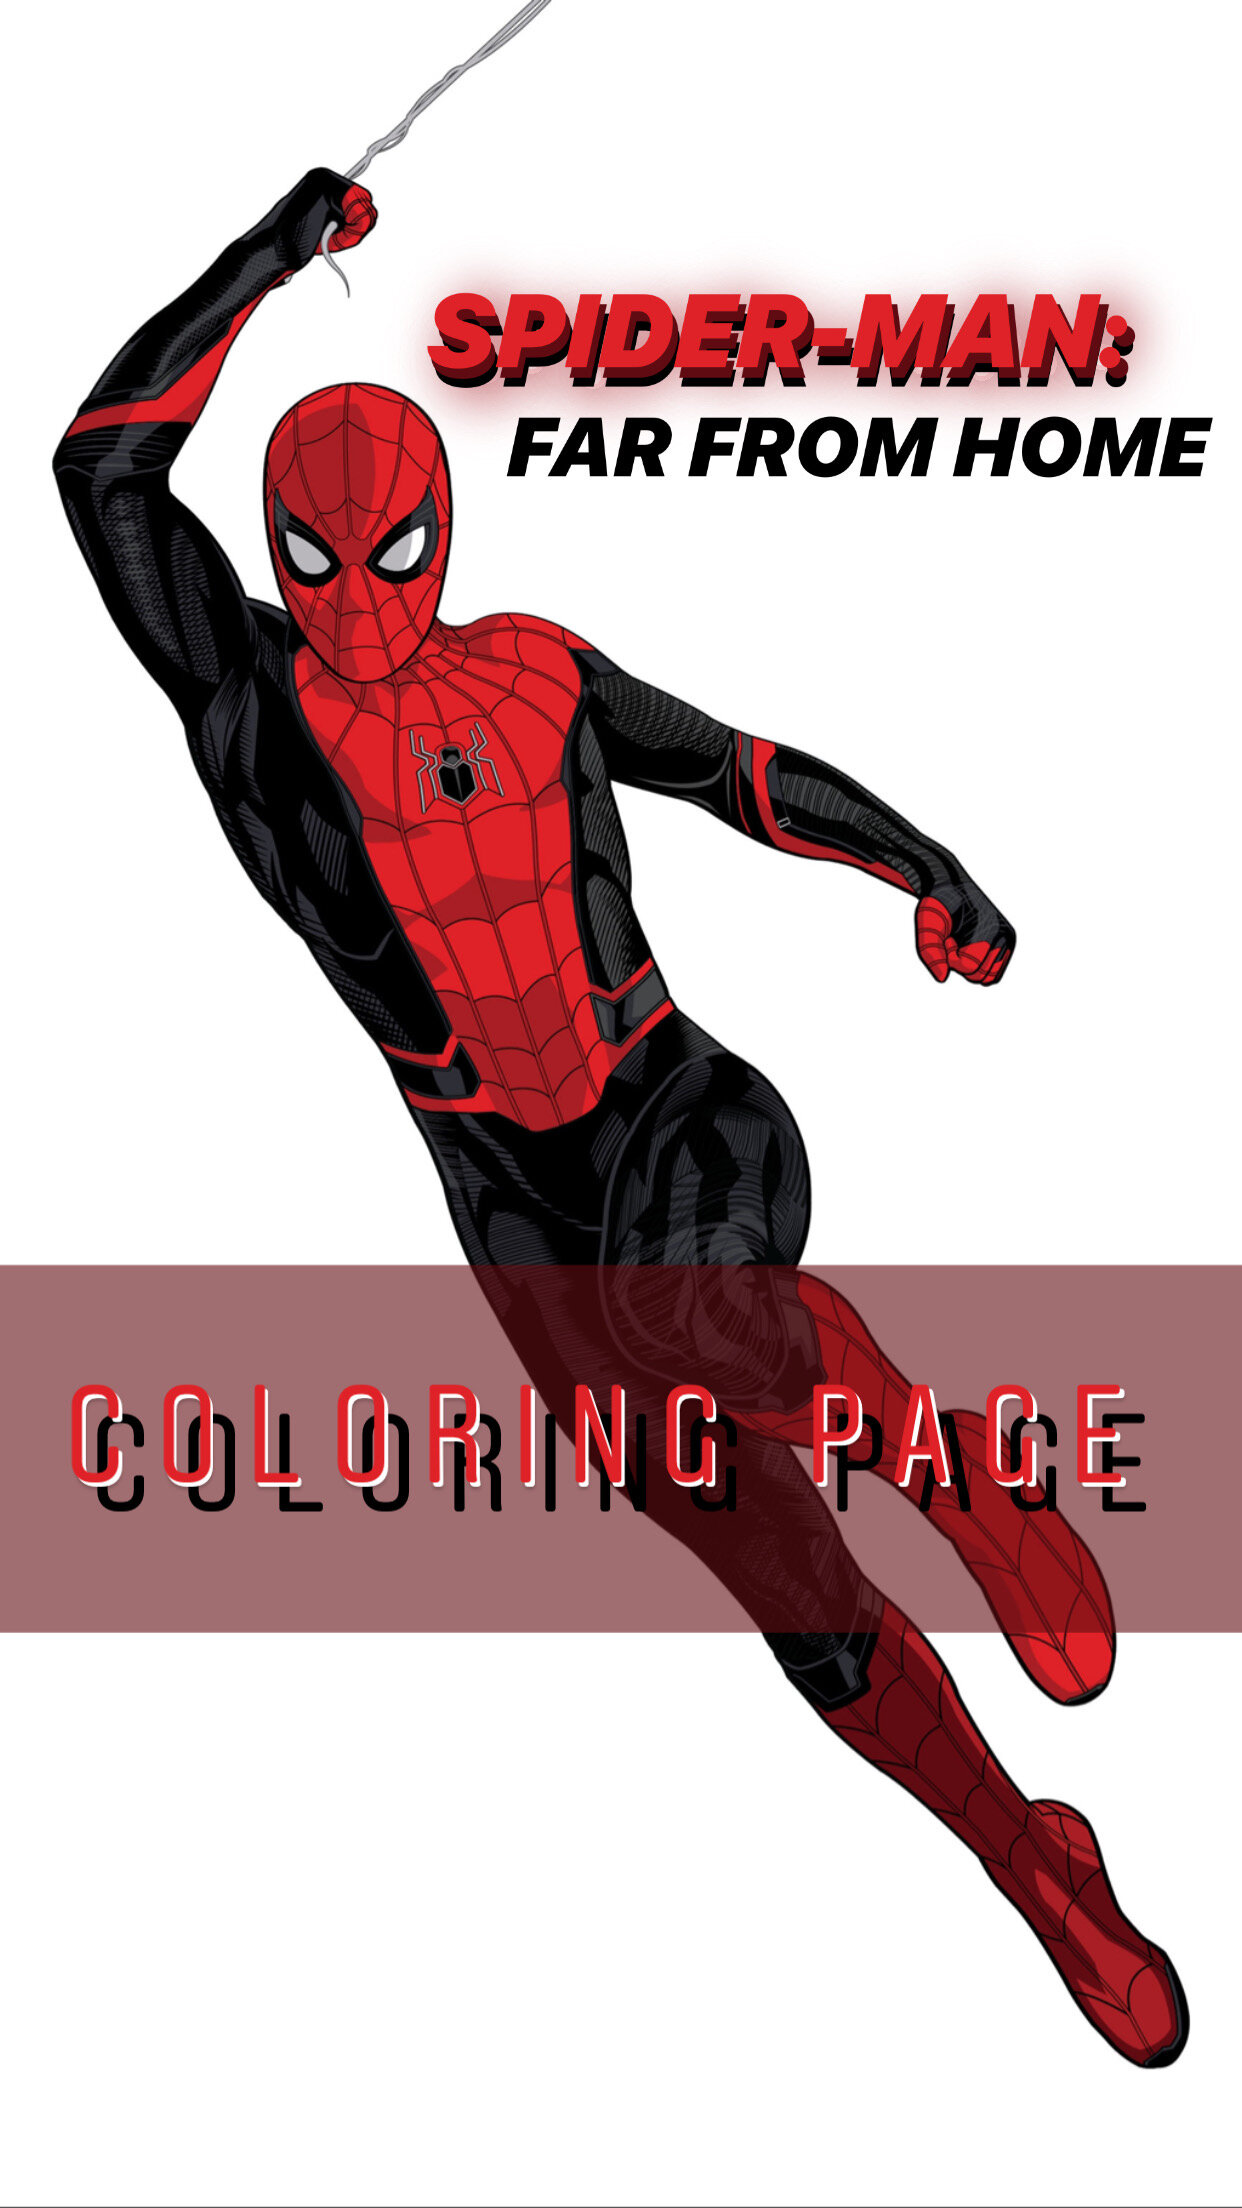 SpiderMan_FarFromHome_ColoringPage_Mockup_Slide1_01.JPG